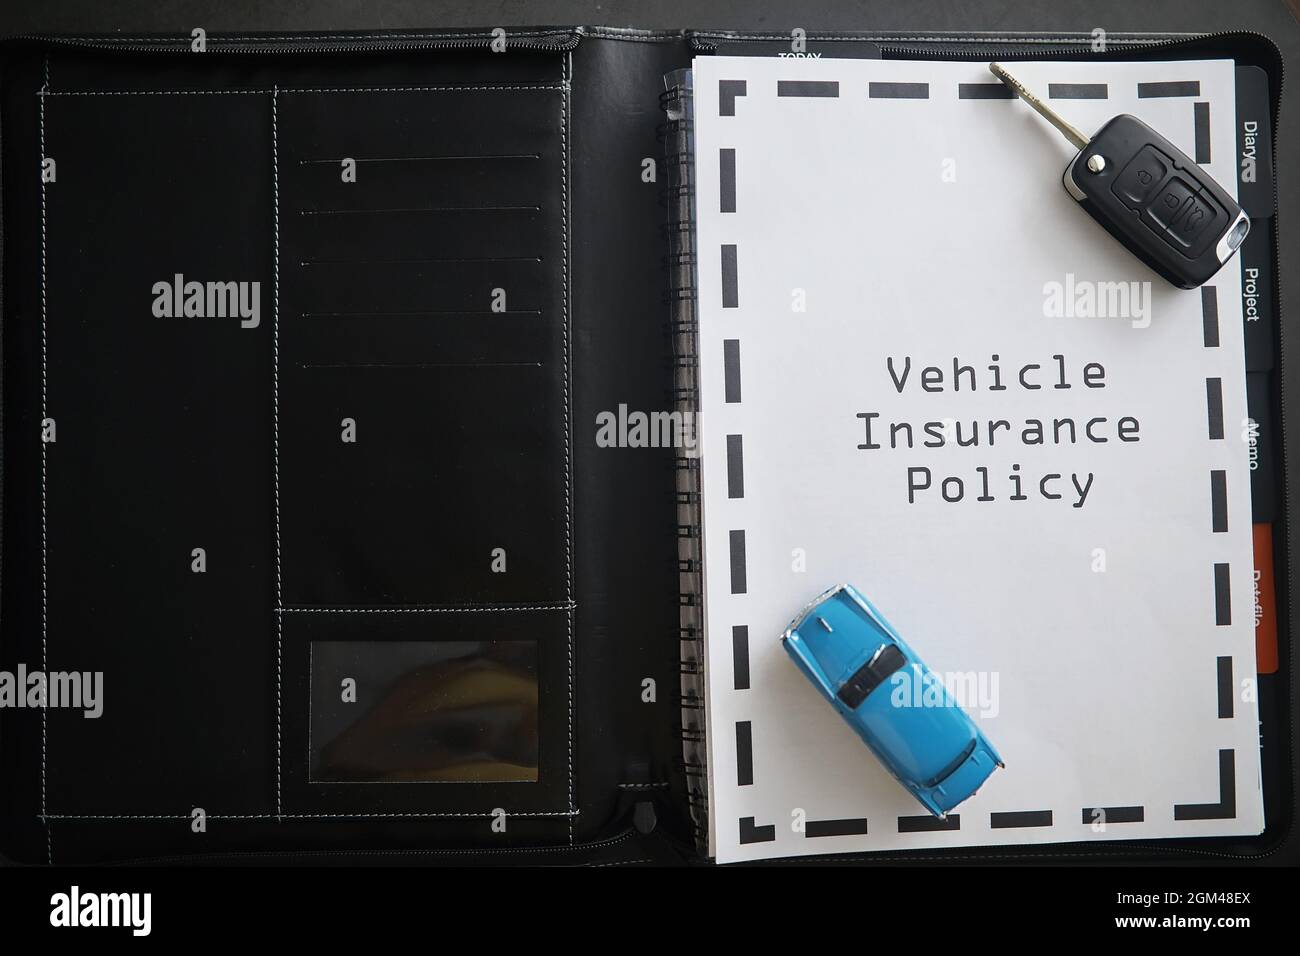 vehicle insurance vehicle insurance cheap insurance credit